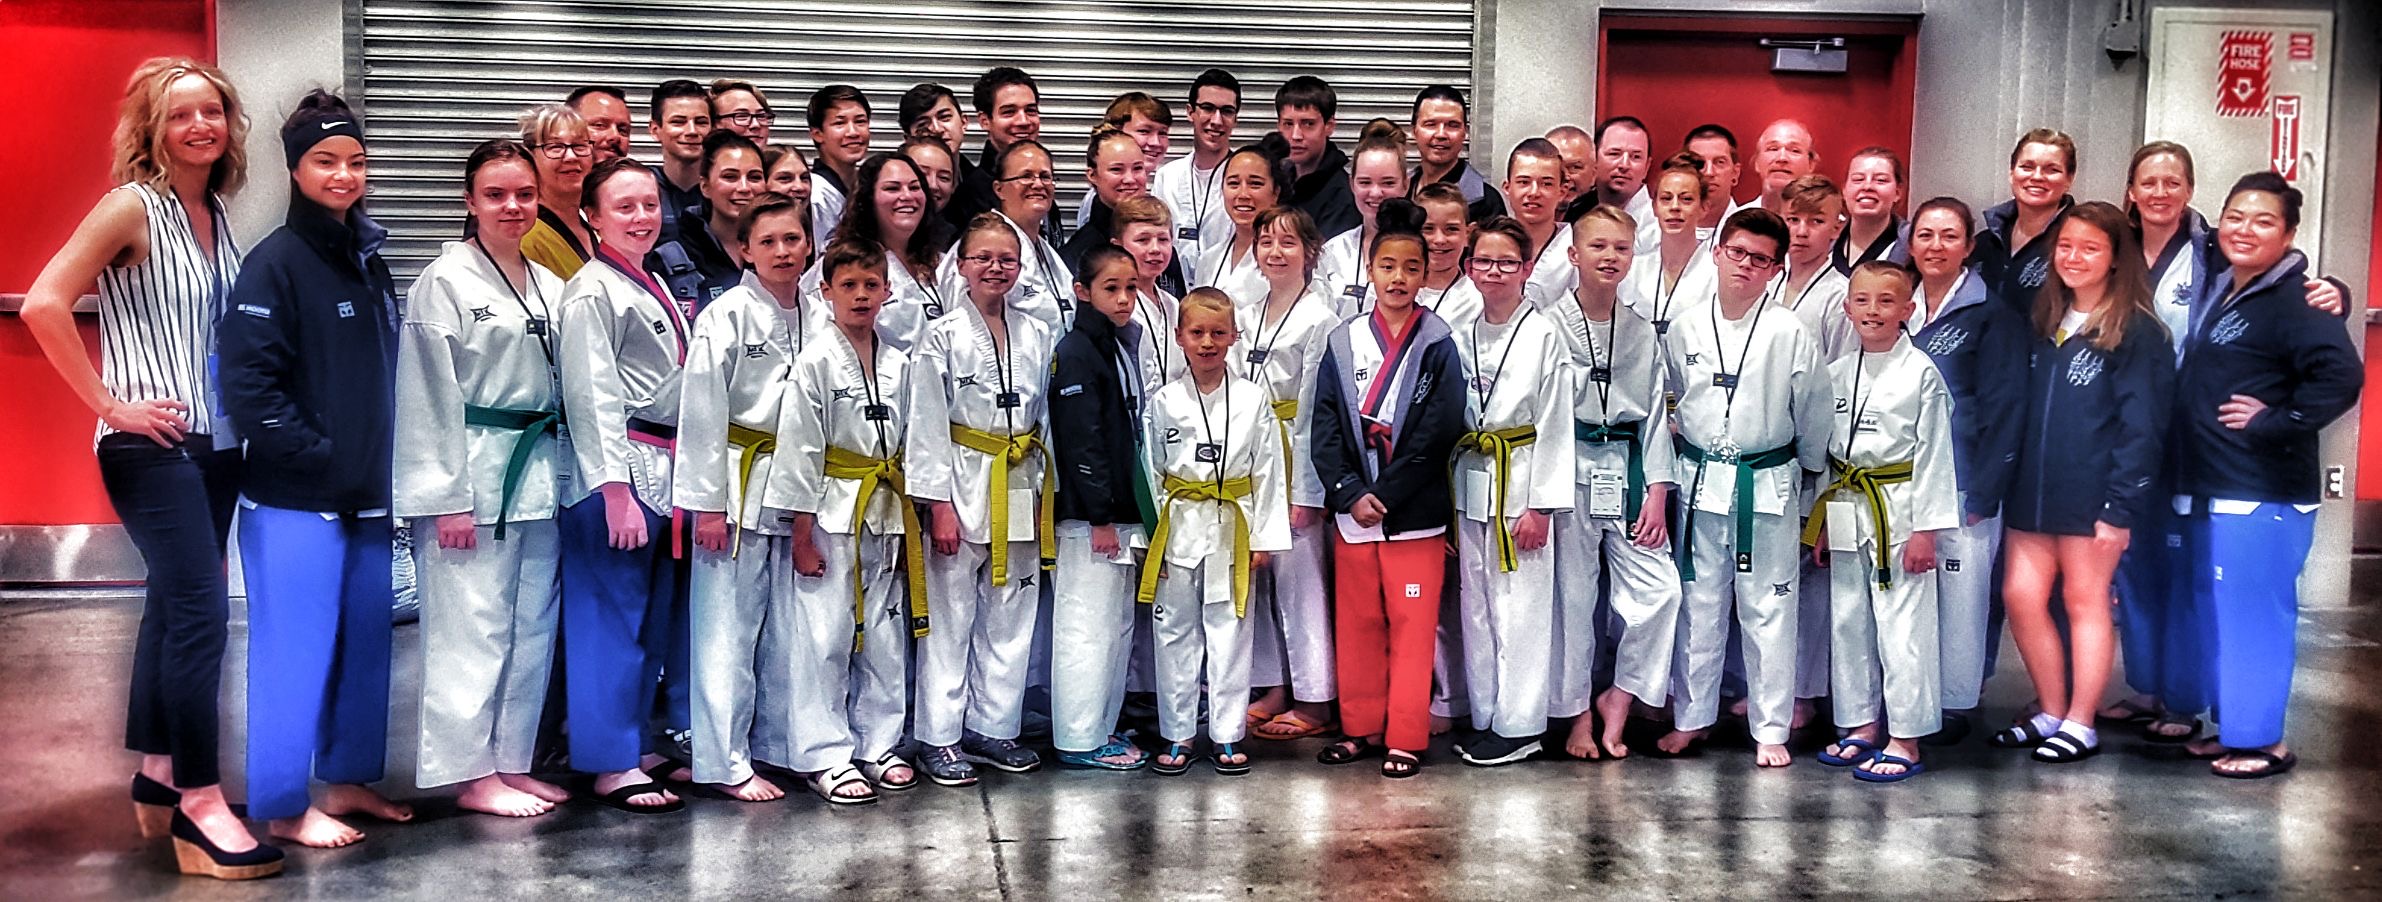 Shiba Taekwondo group image